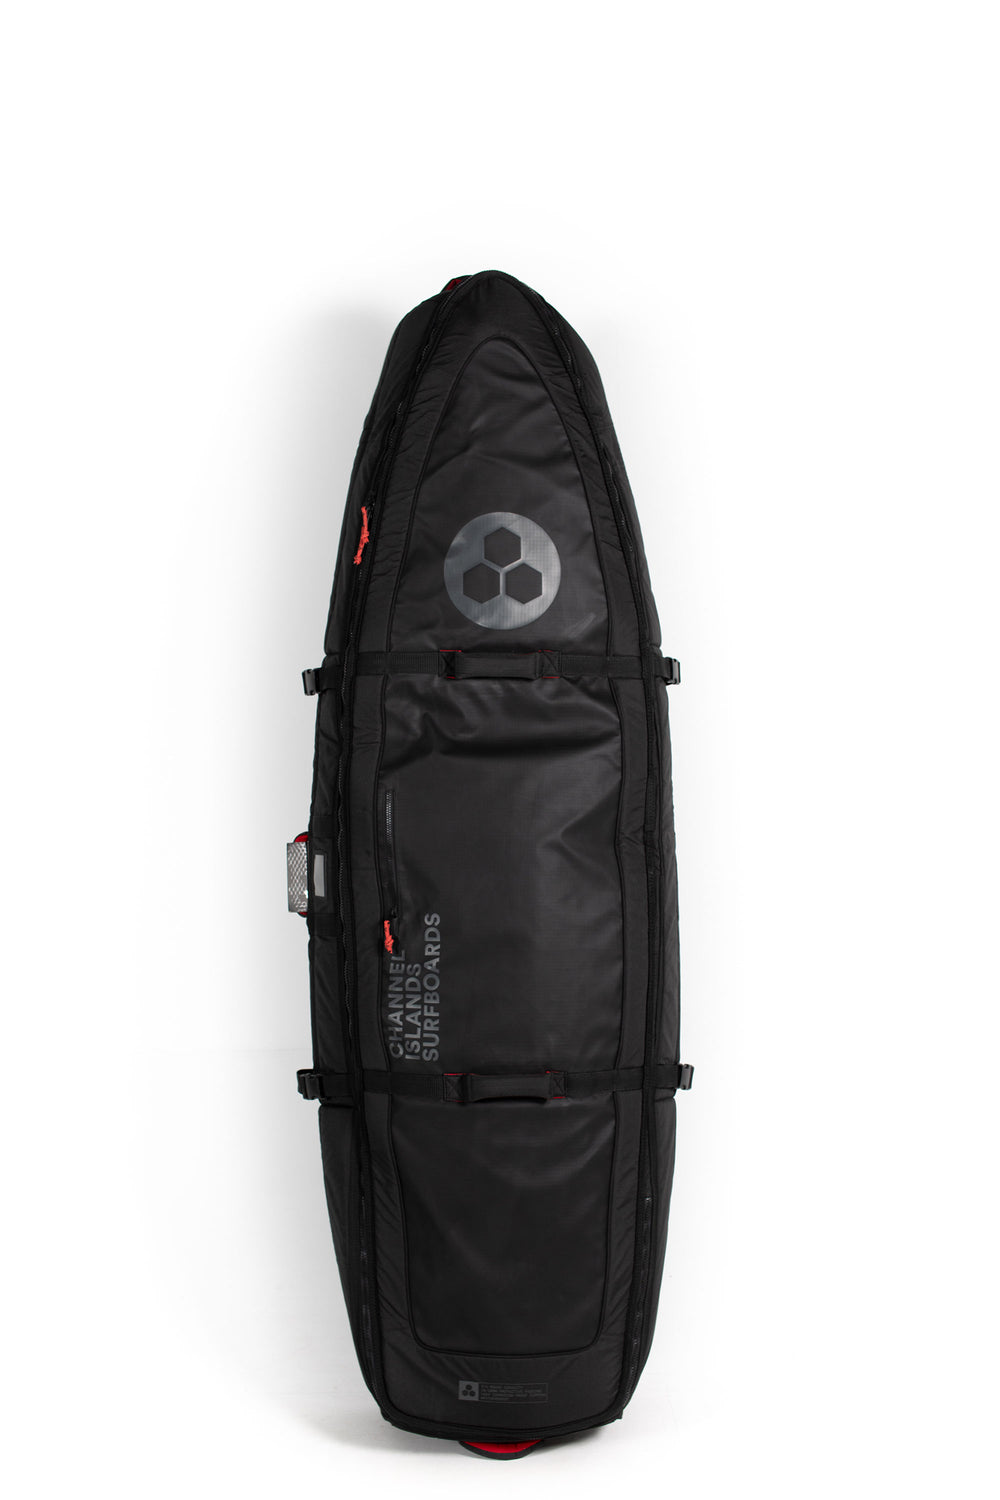 Pukas-Surf-Shop-channel-islands-boardbags-cuaq-traveler-wheel-7-4